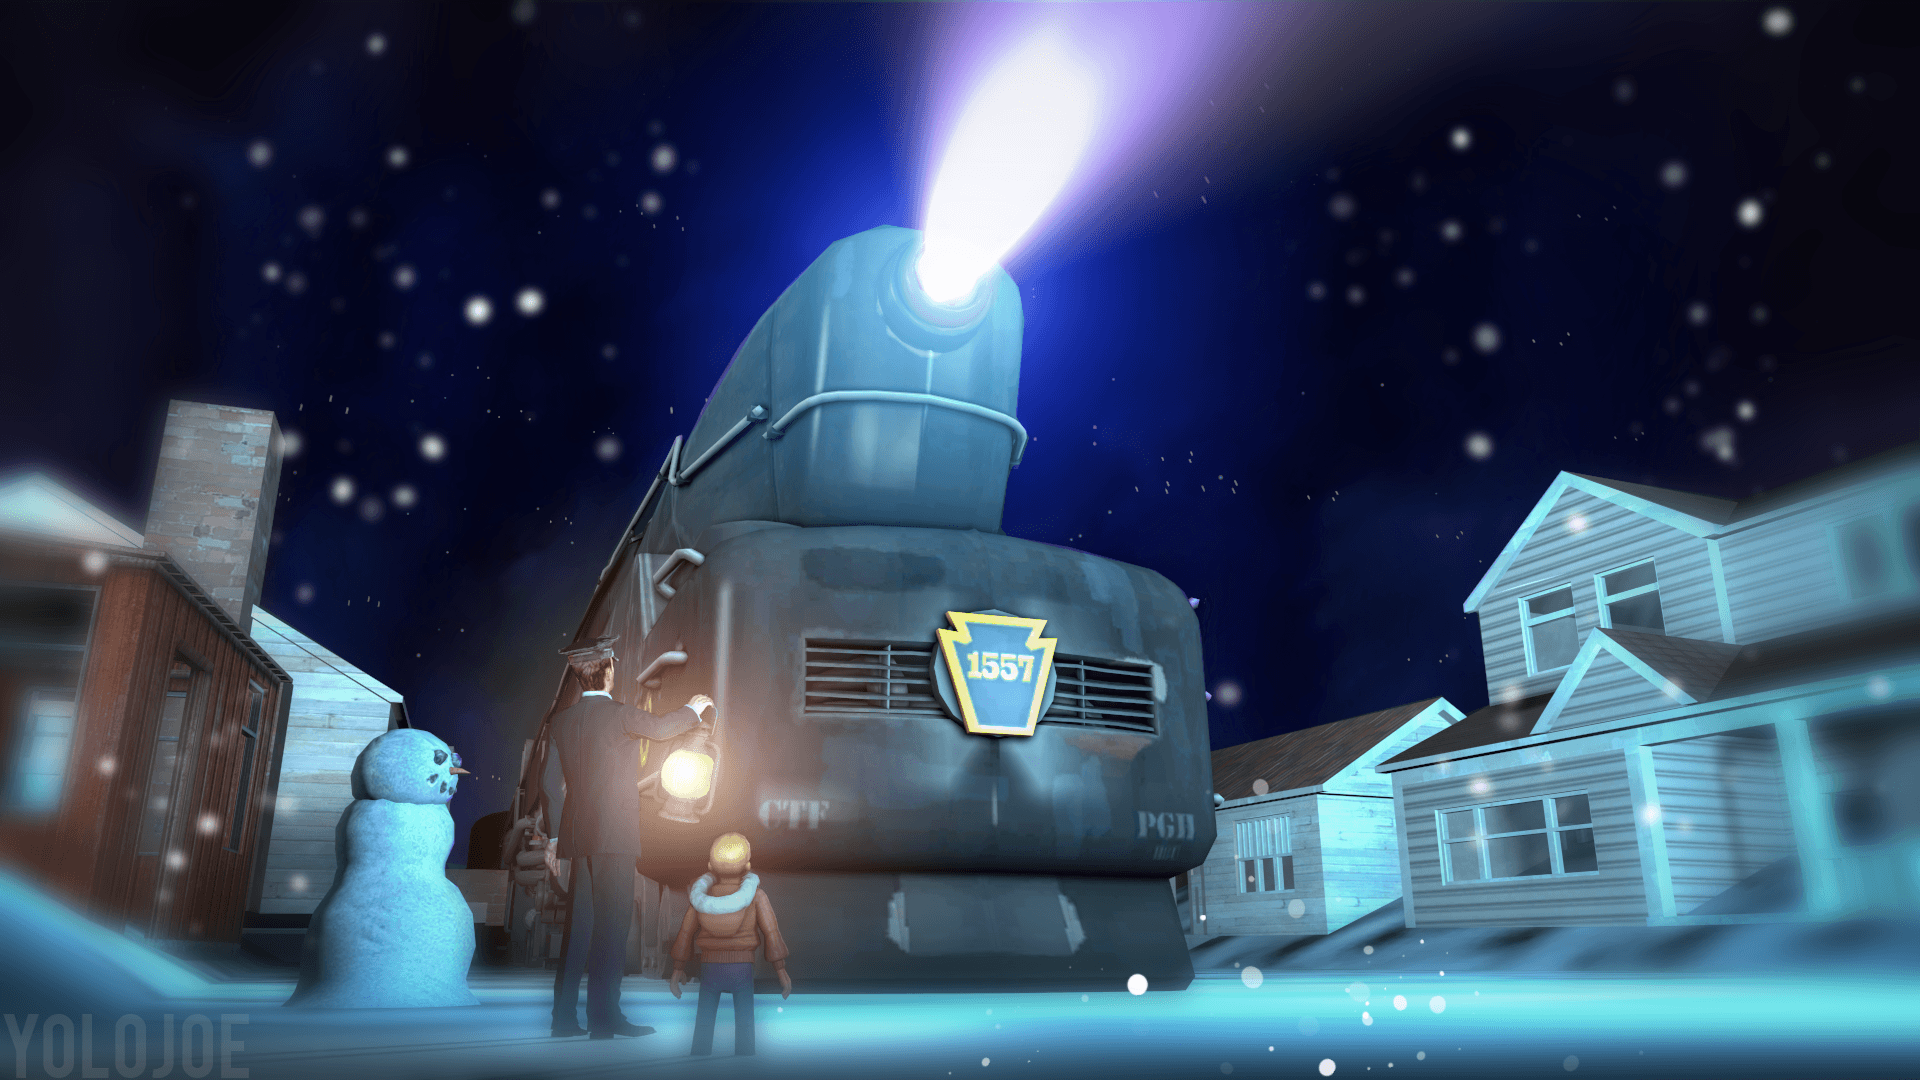 The Polar Express [SFM]